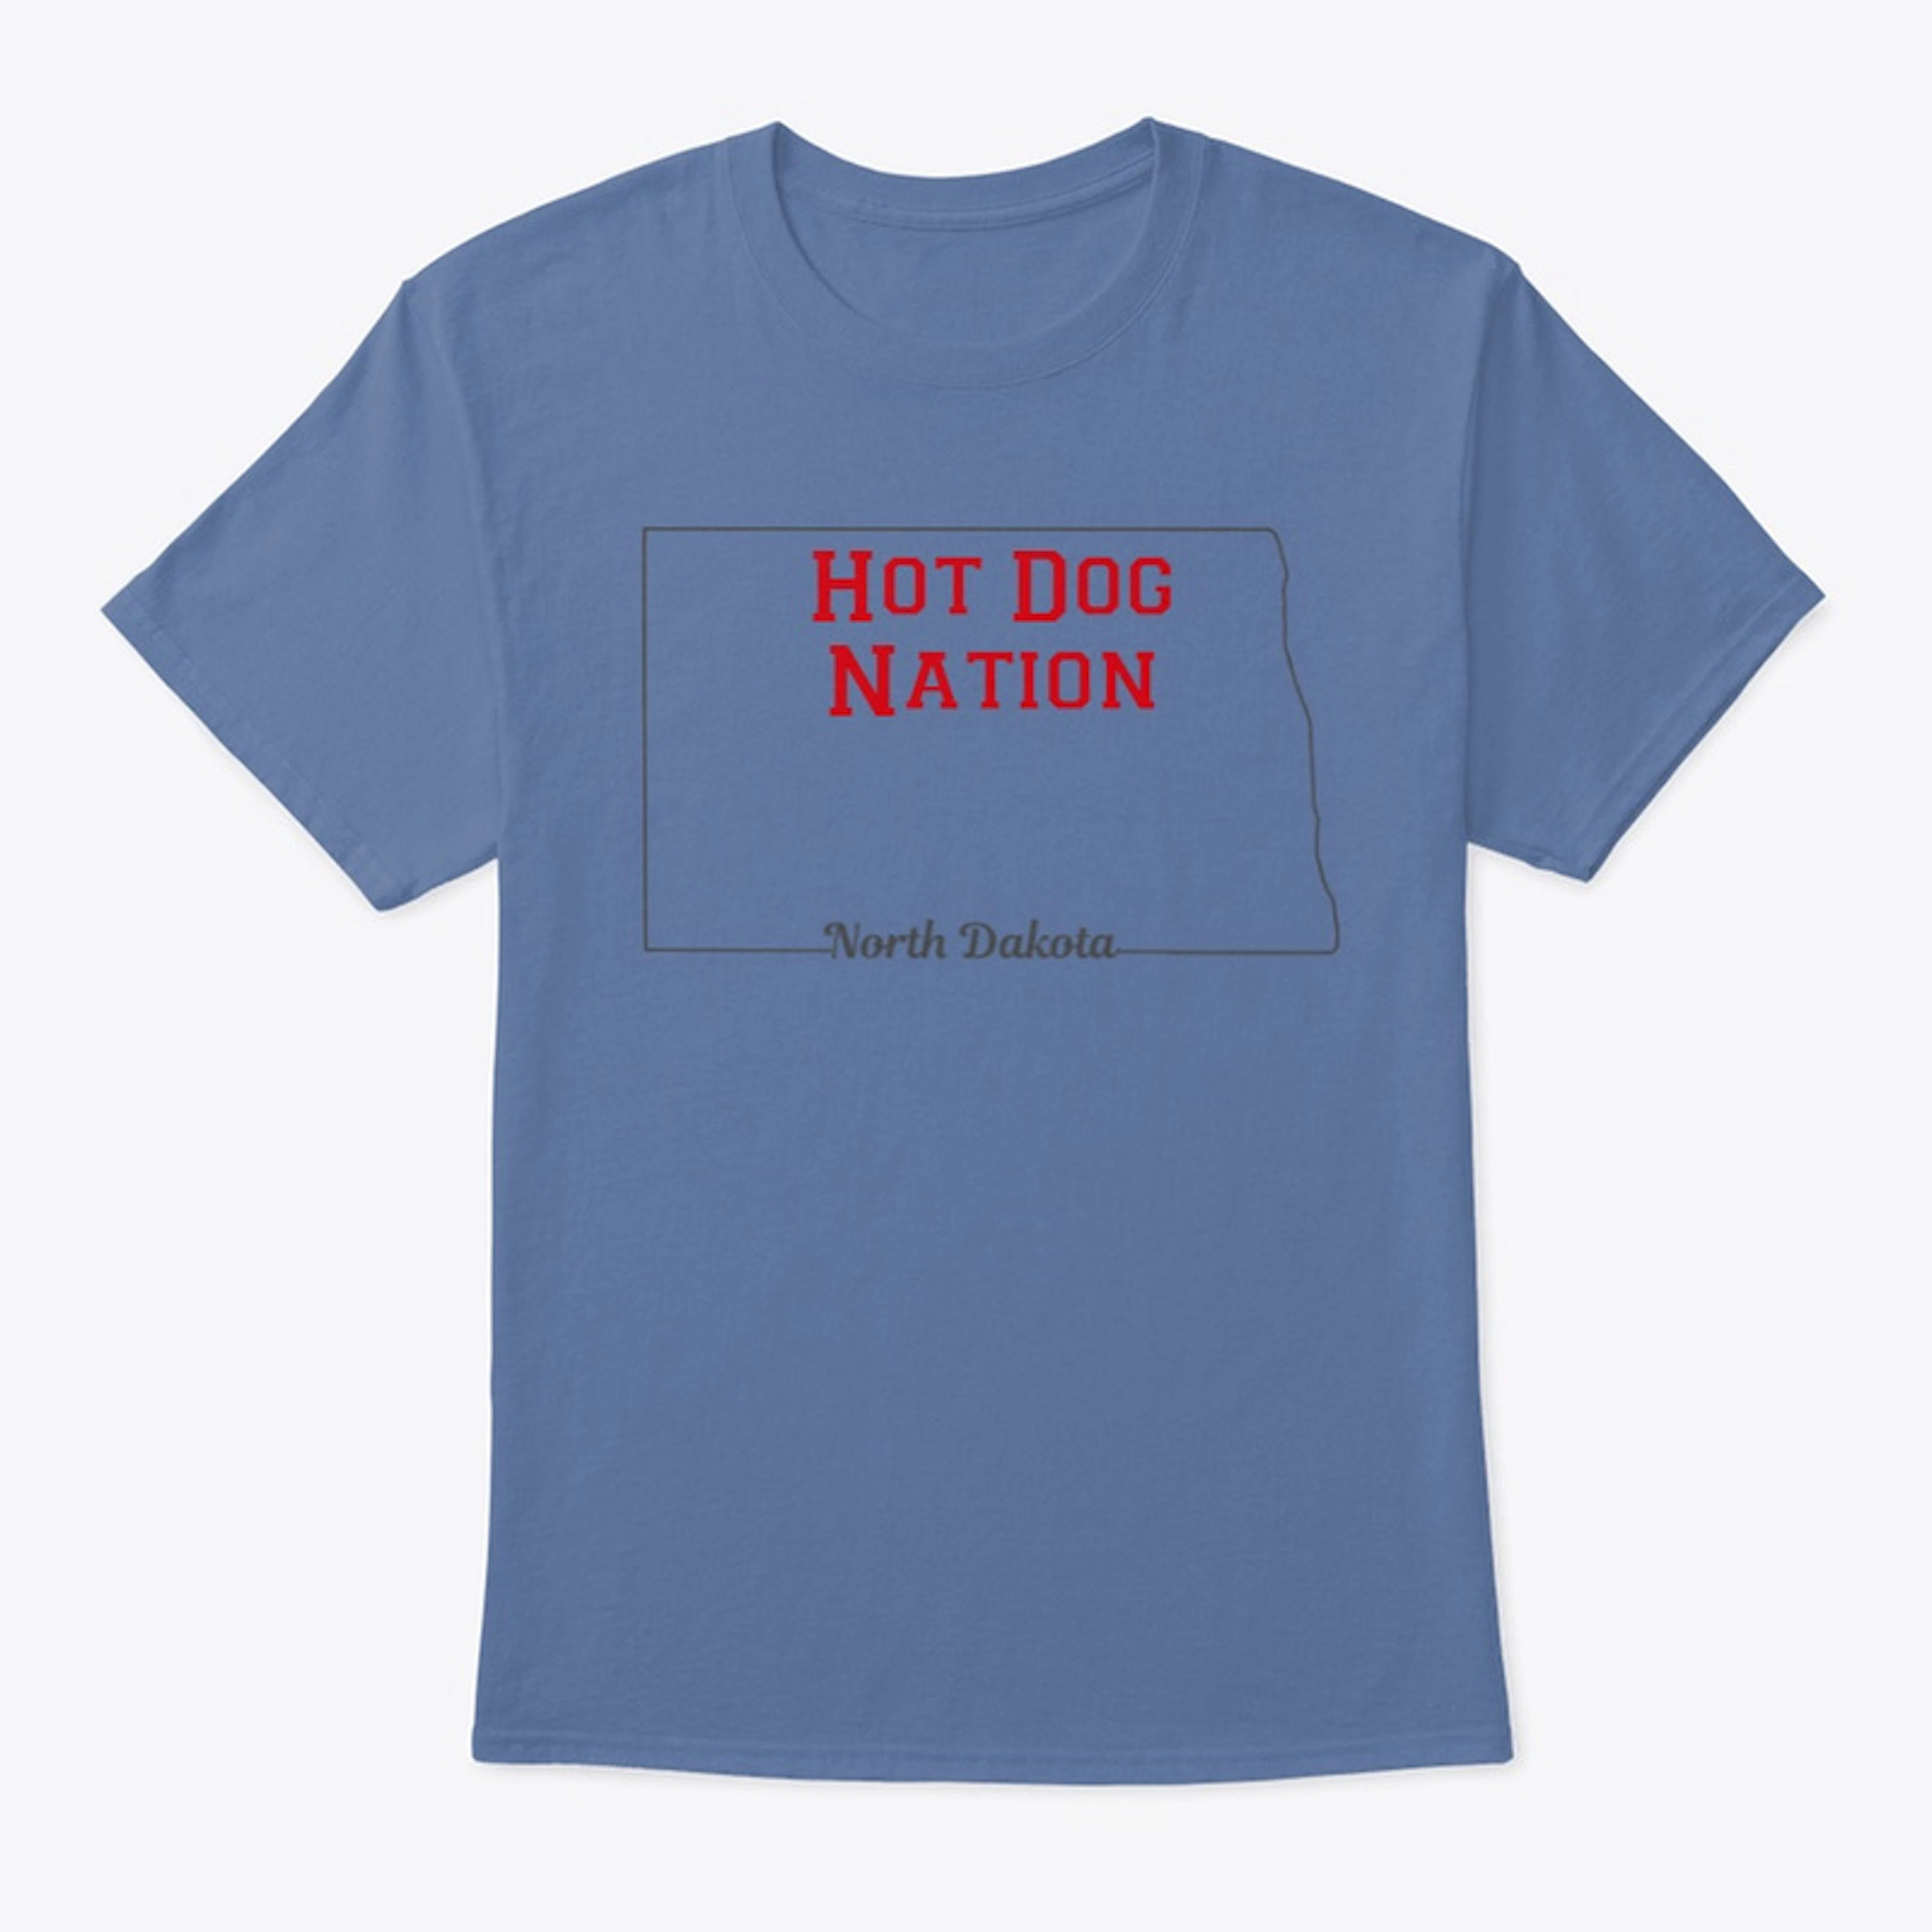 Hot Dog Nation - North Dakota